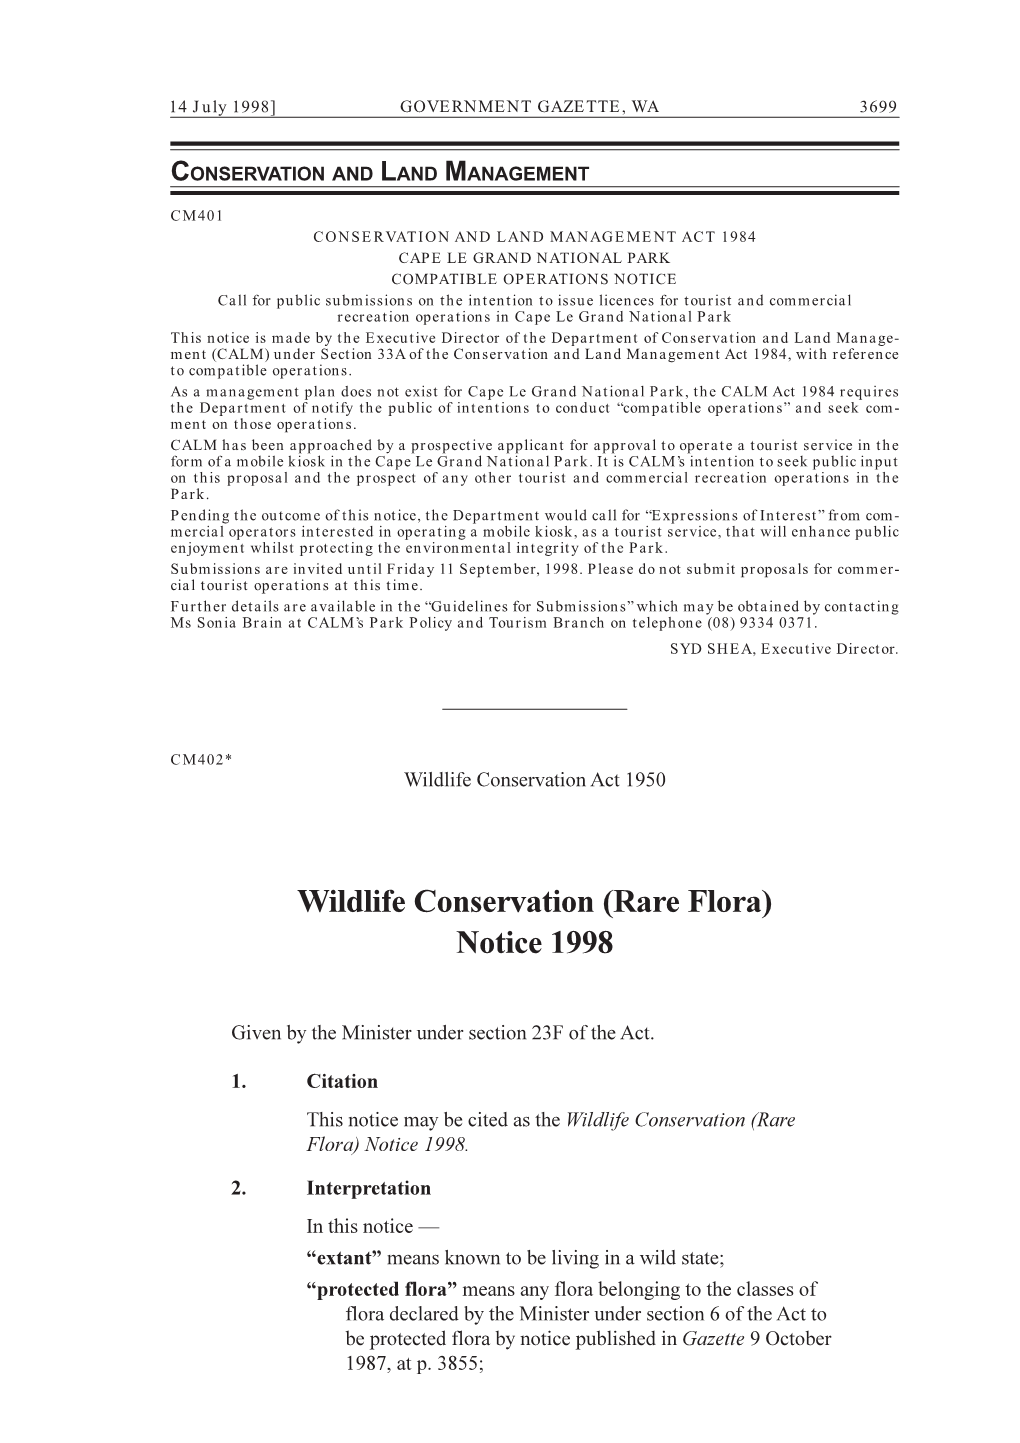 Wildlife Conservation (Rare Flora) Notice 1998